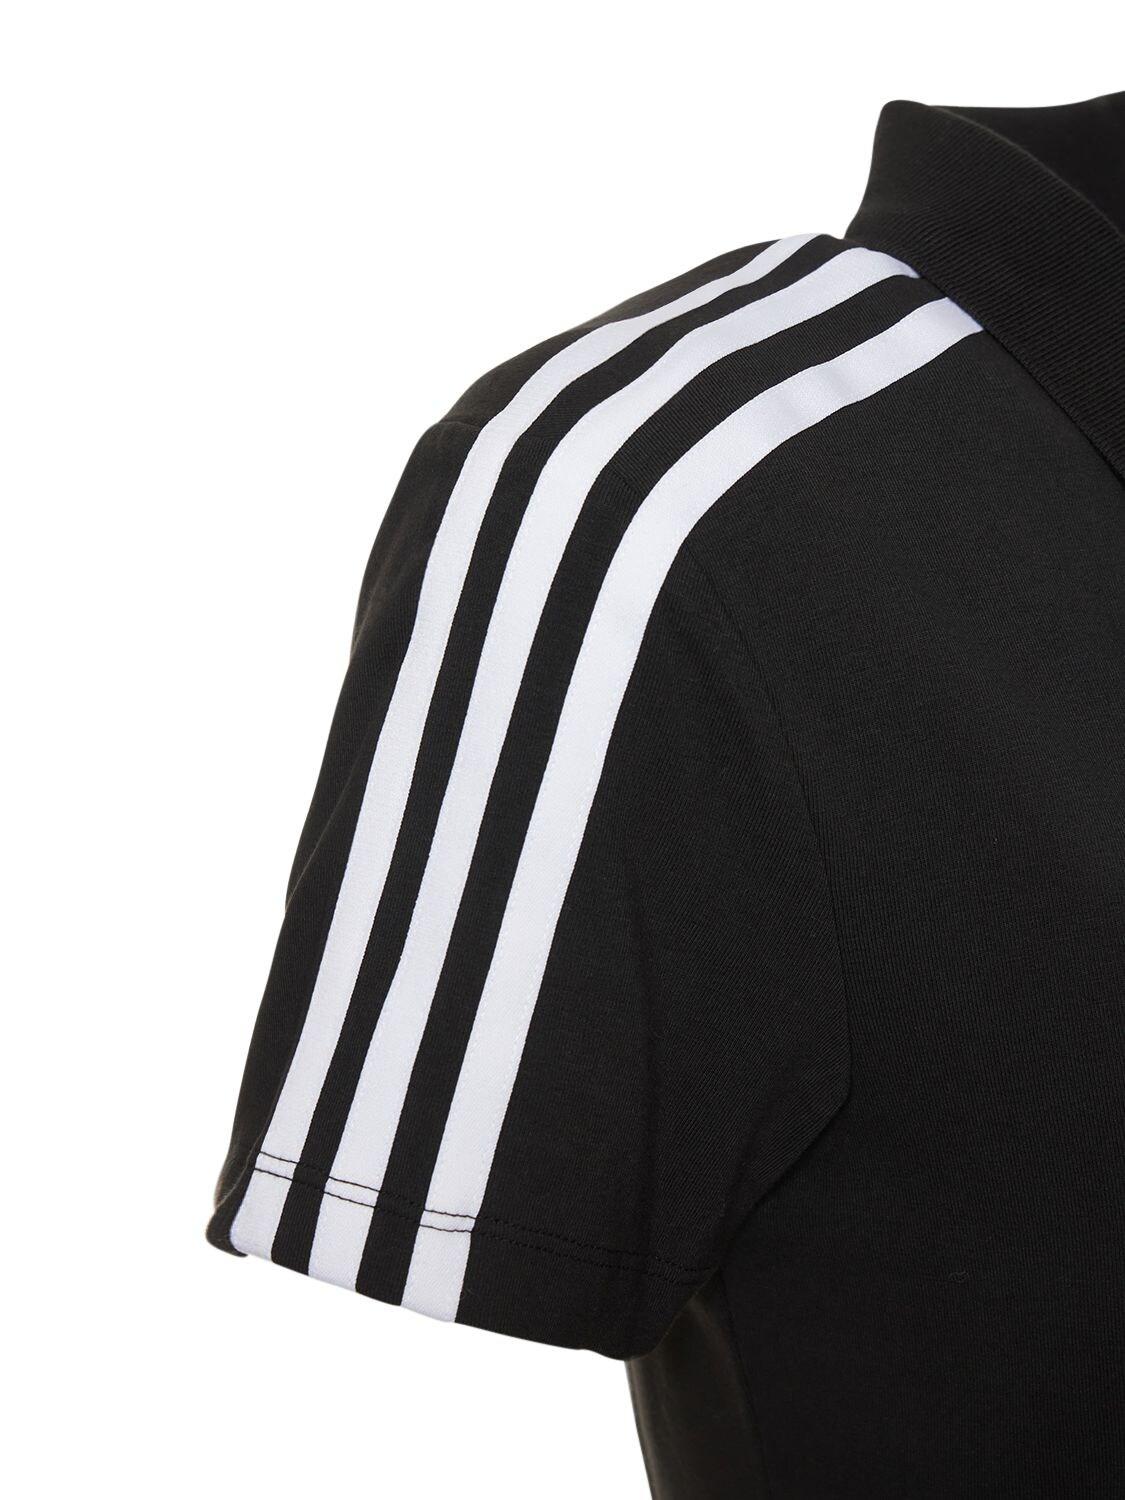 adidas Originals Fitted Cotton Blend T-shirt Dress in Black | Lyst